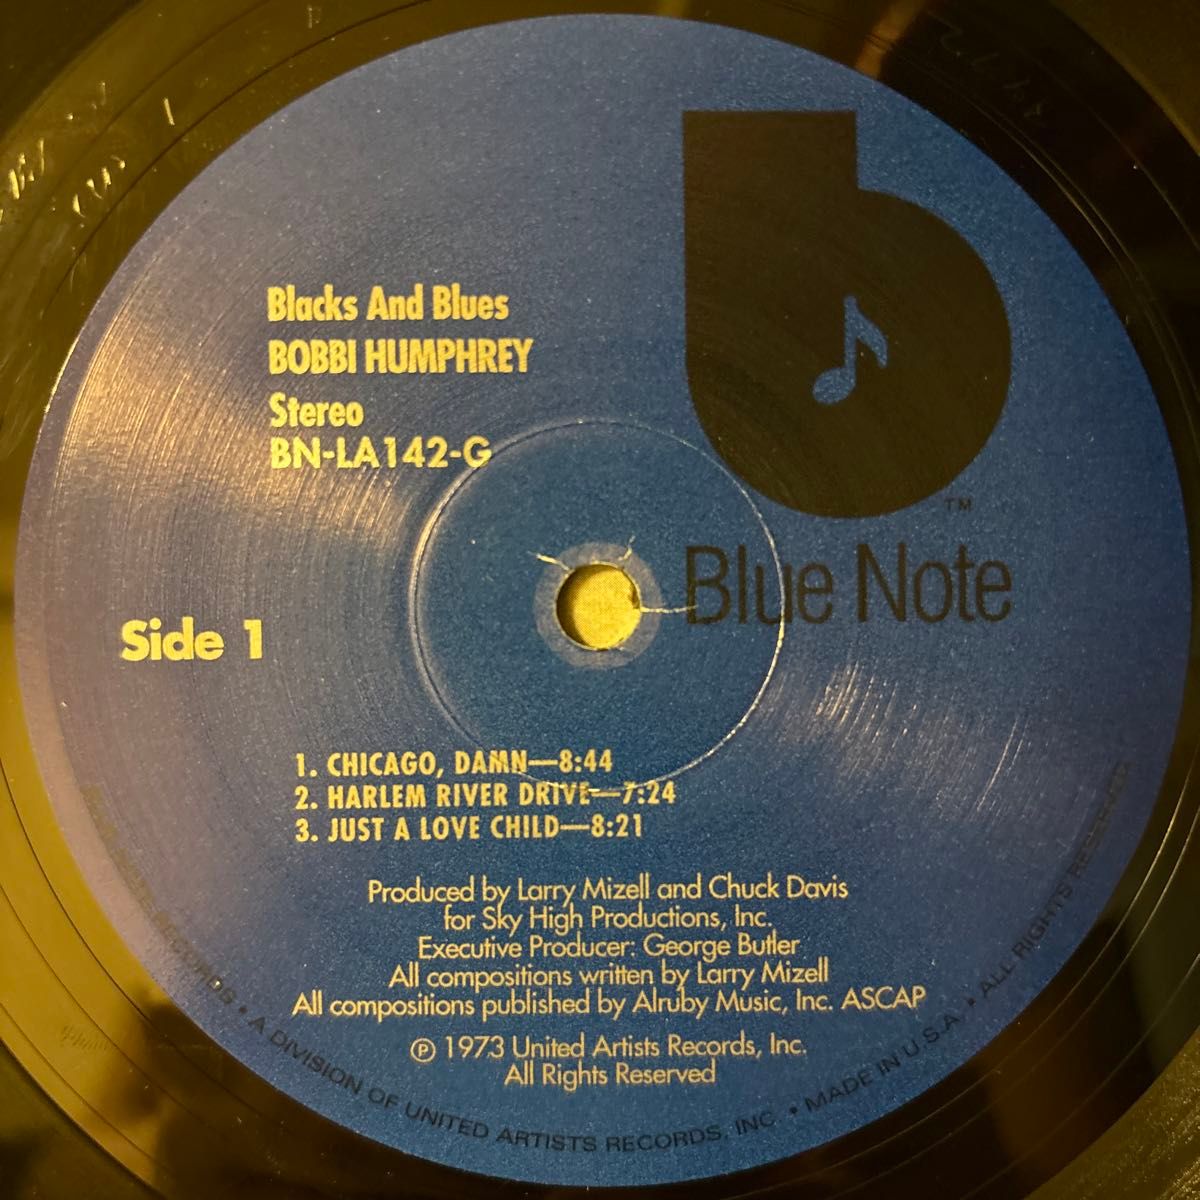 Bobbi Humphrey Blacks And Blues レコード LP ボビー・ハンフリー vinyl アナログ jazz